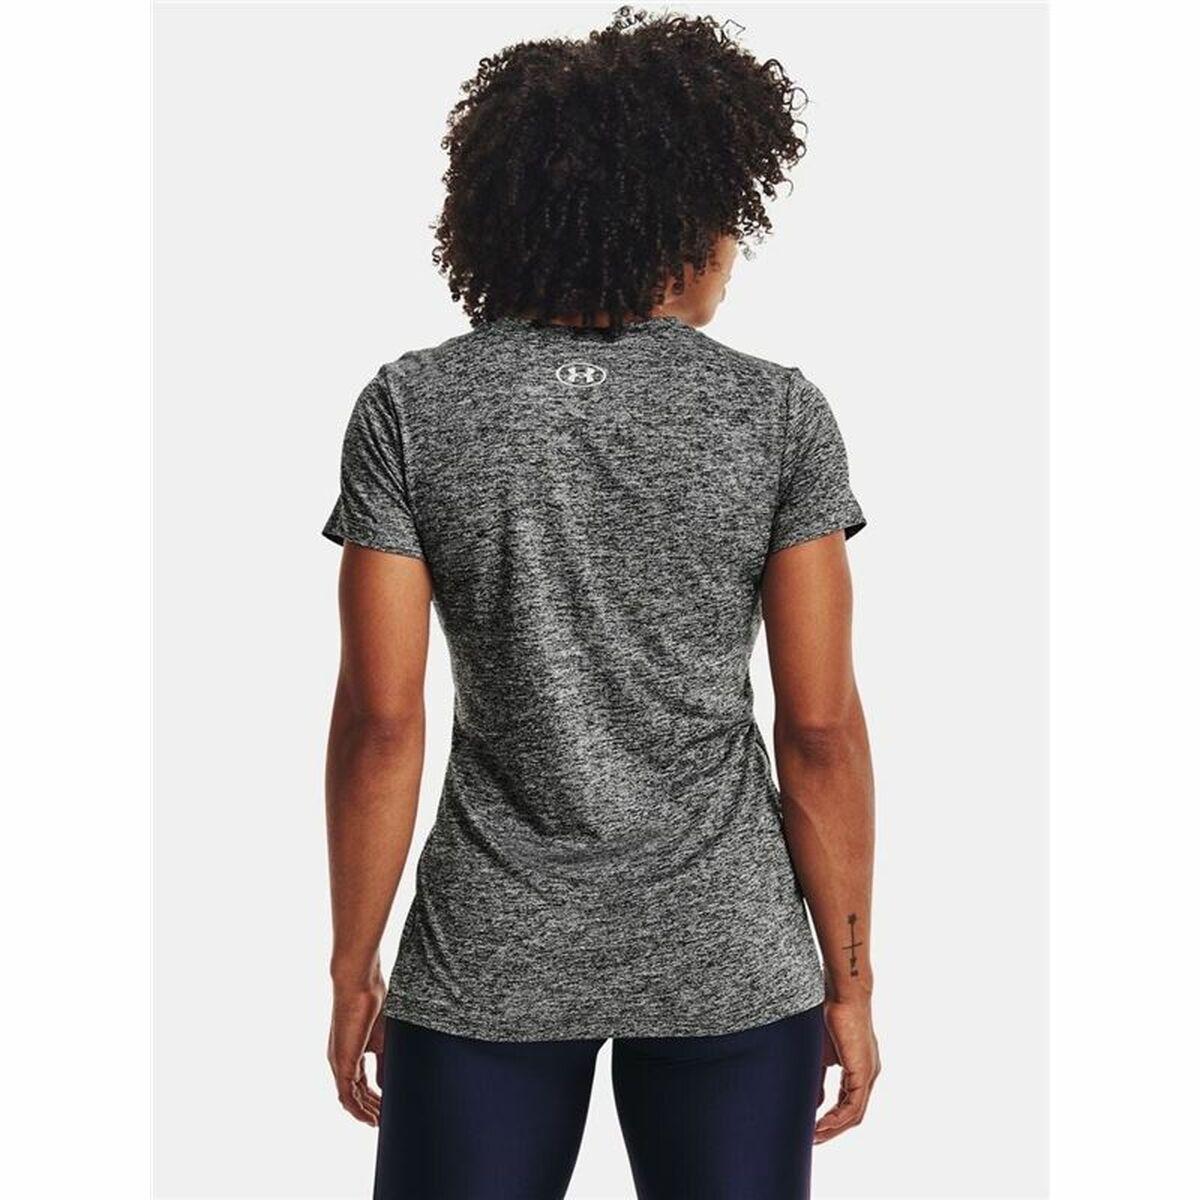 Under Armour Women's Short Sleeve T-shirt Tech Twist Grey in Gray